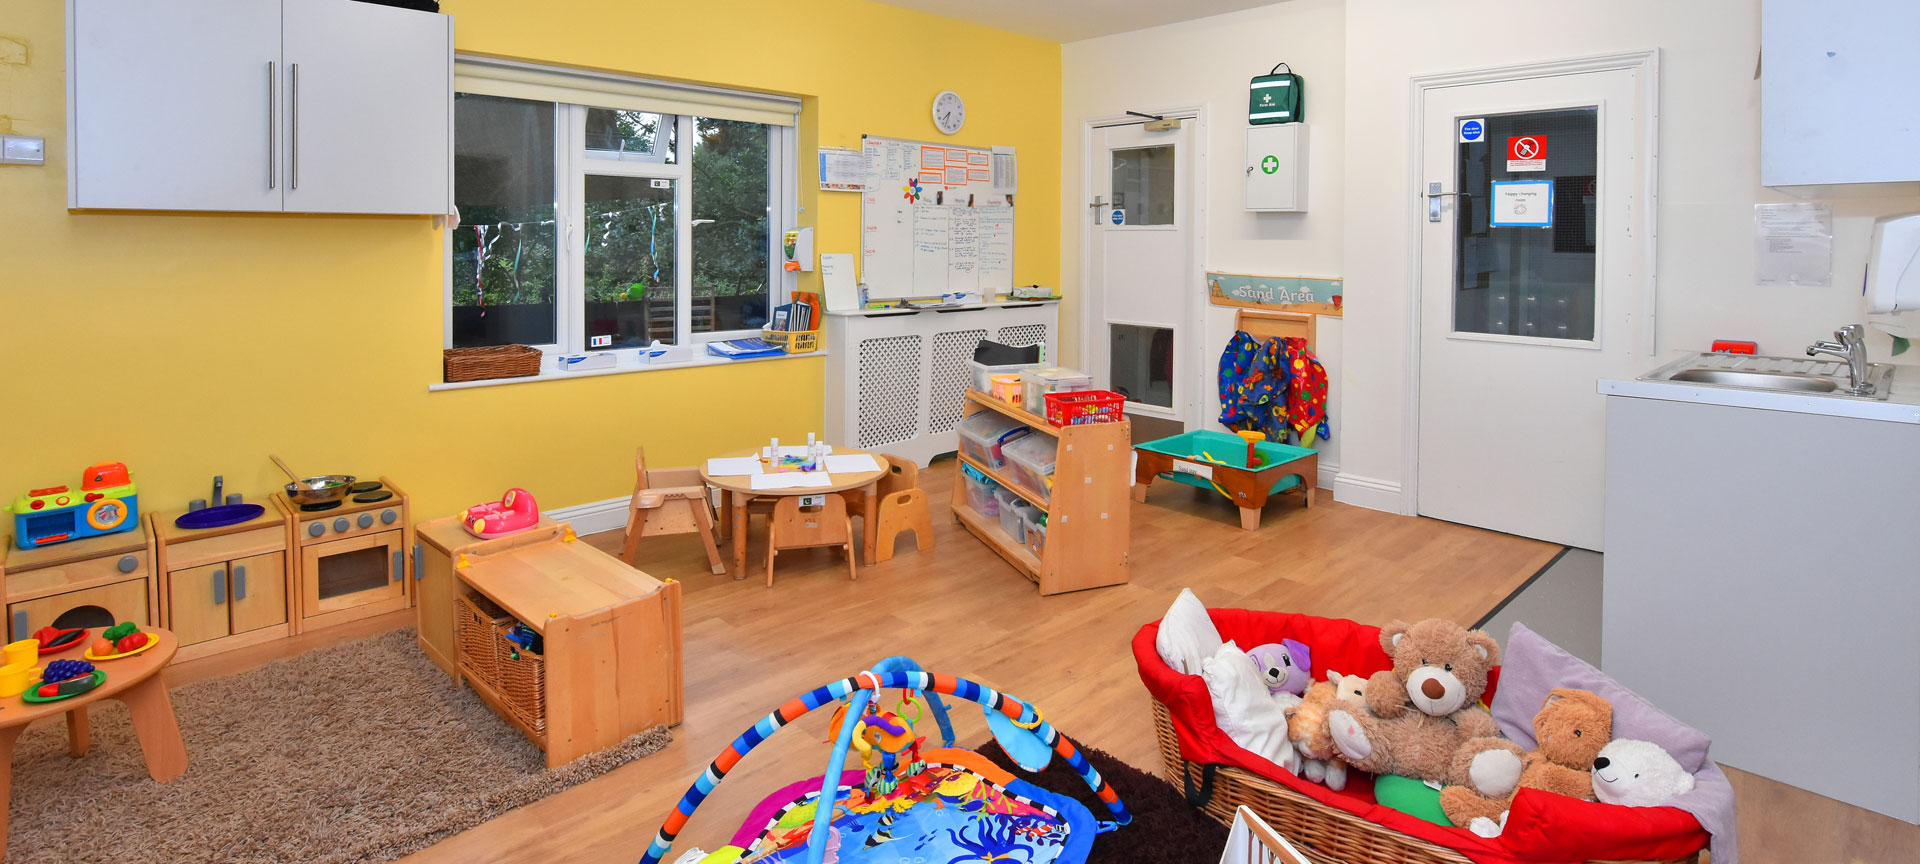 Maidstone Day Nursery and Preschool